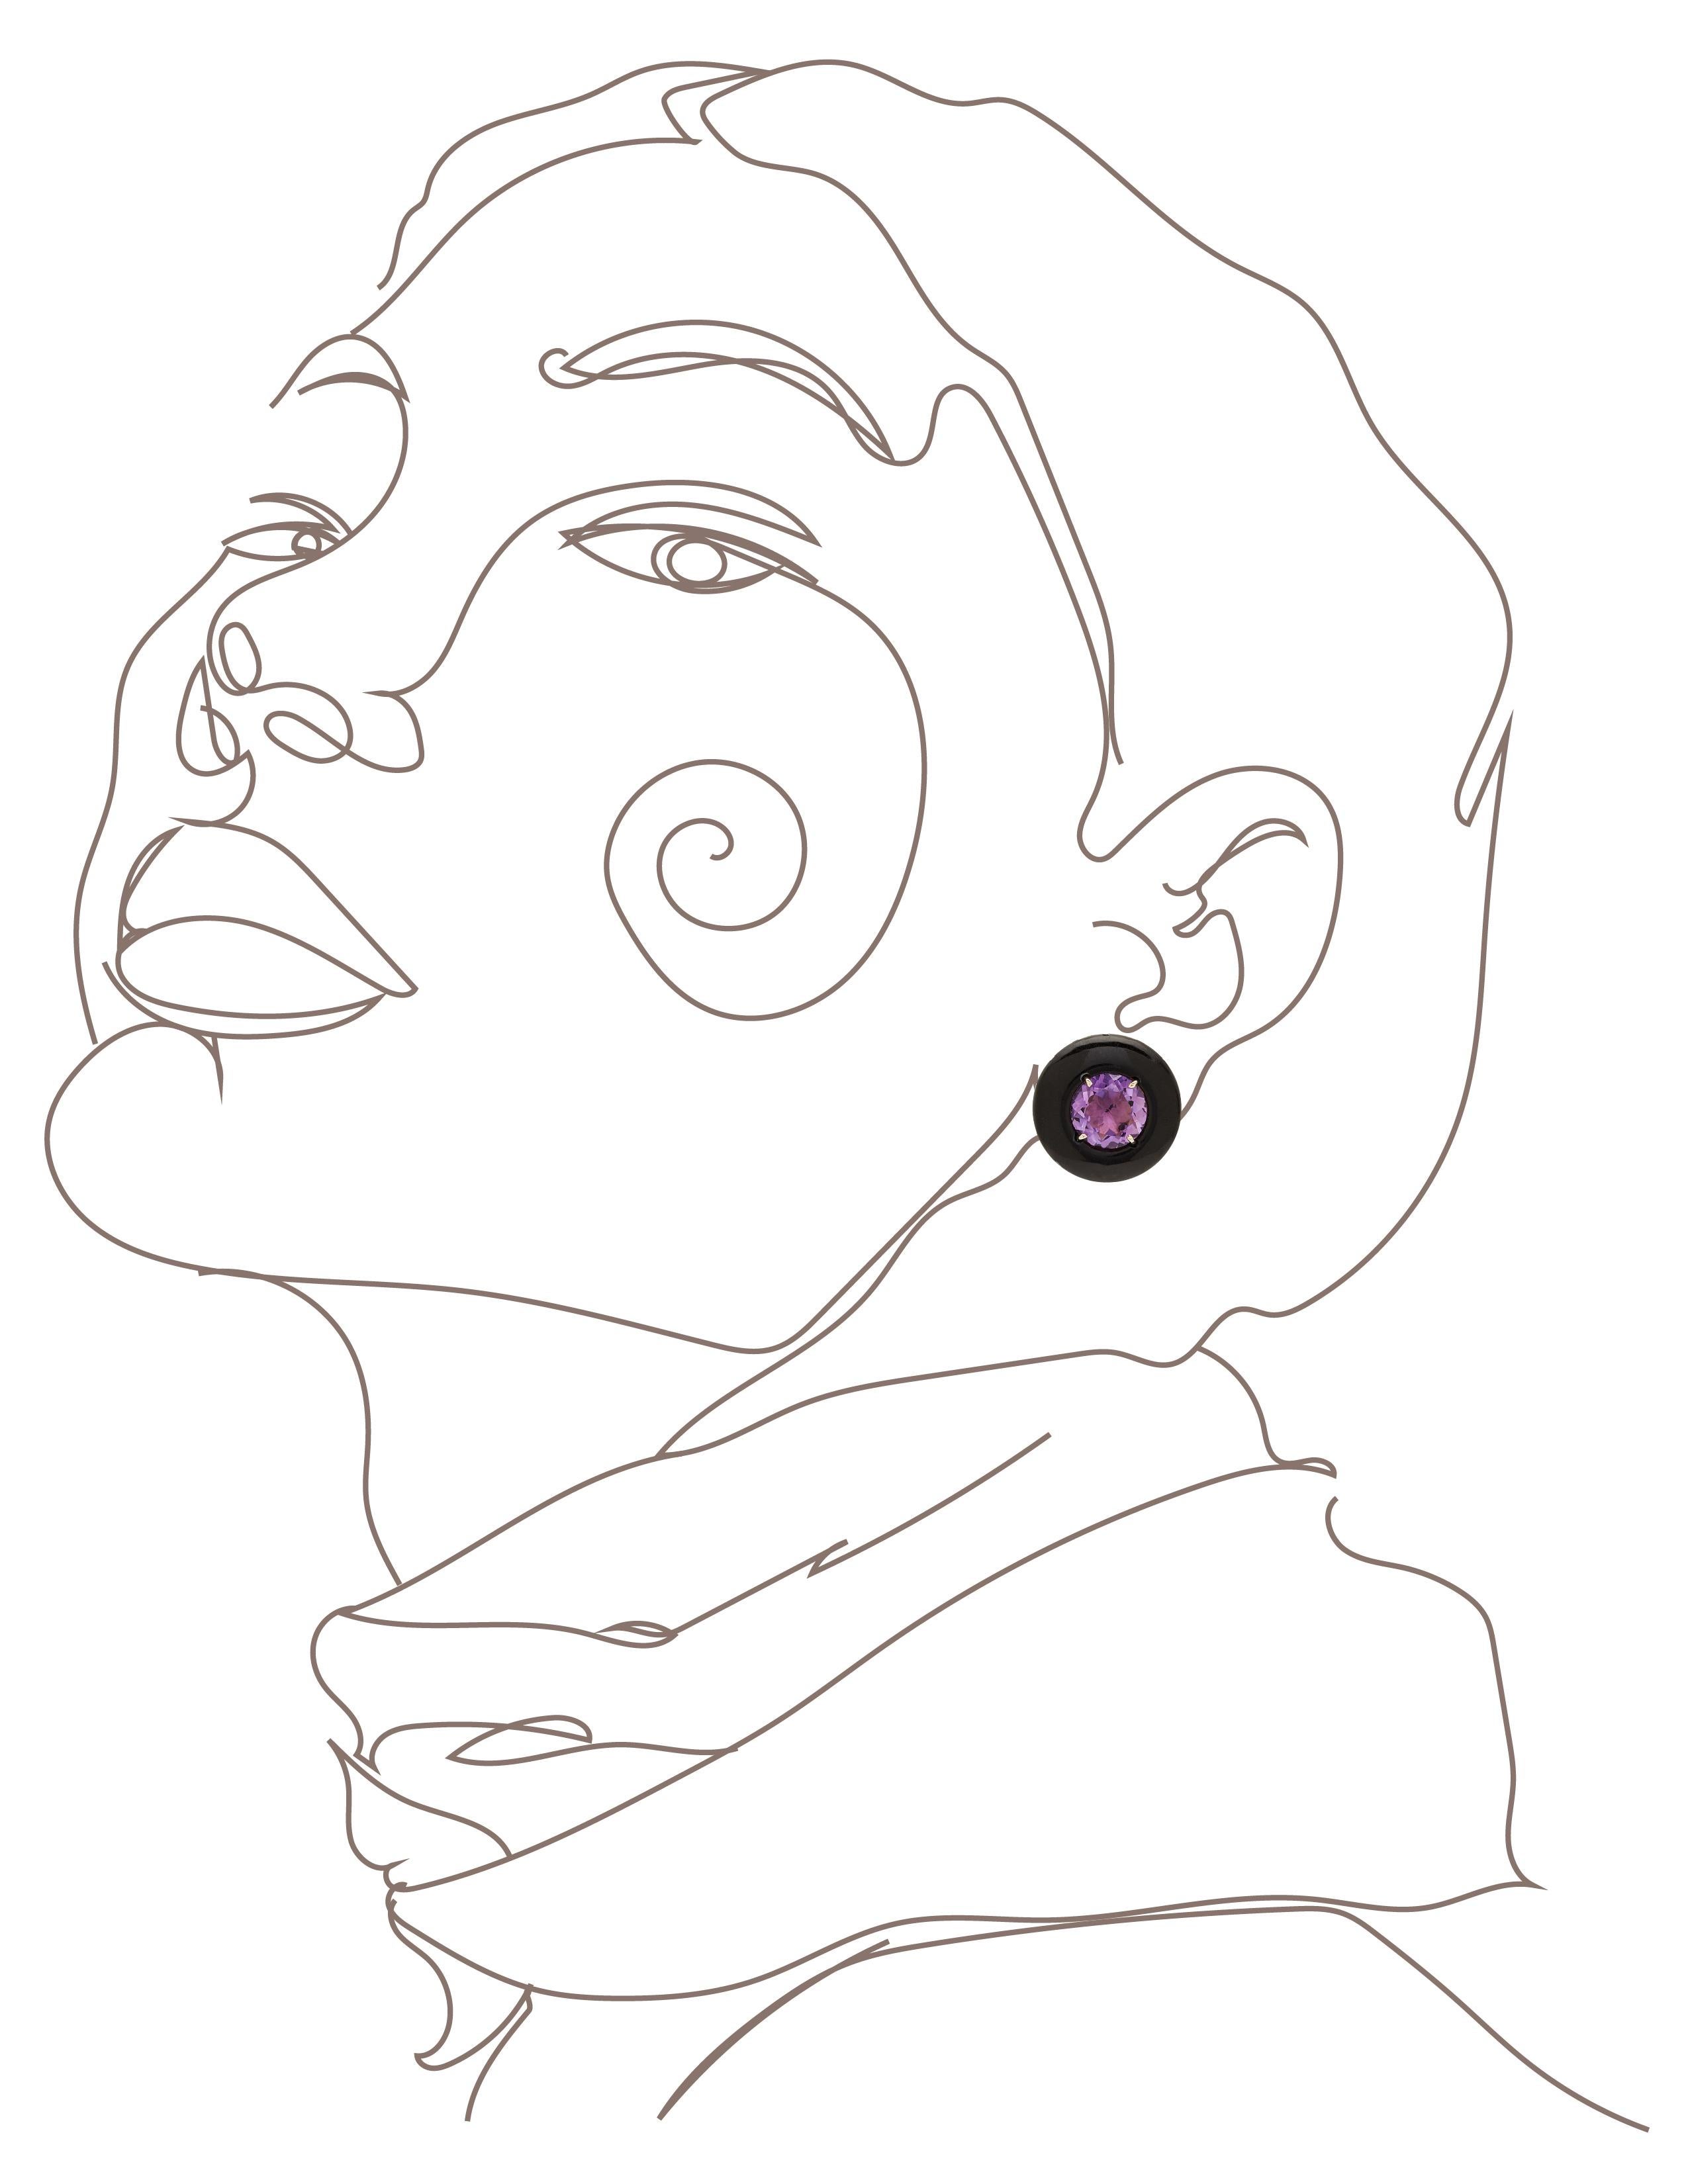 black amethyst earrings